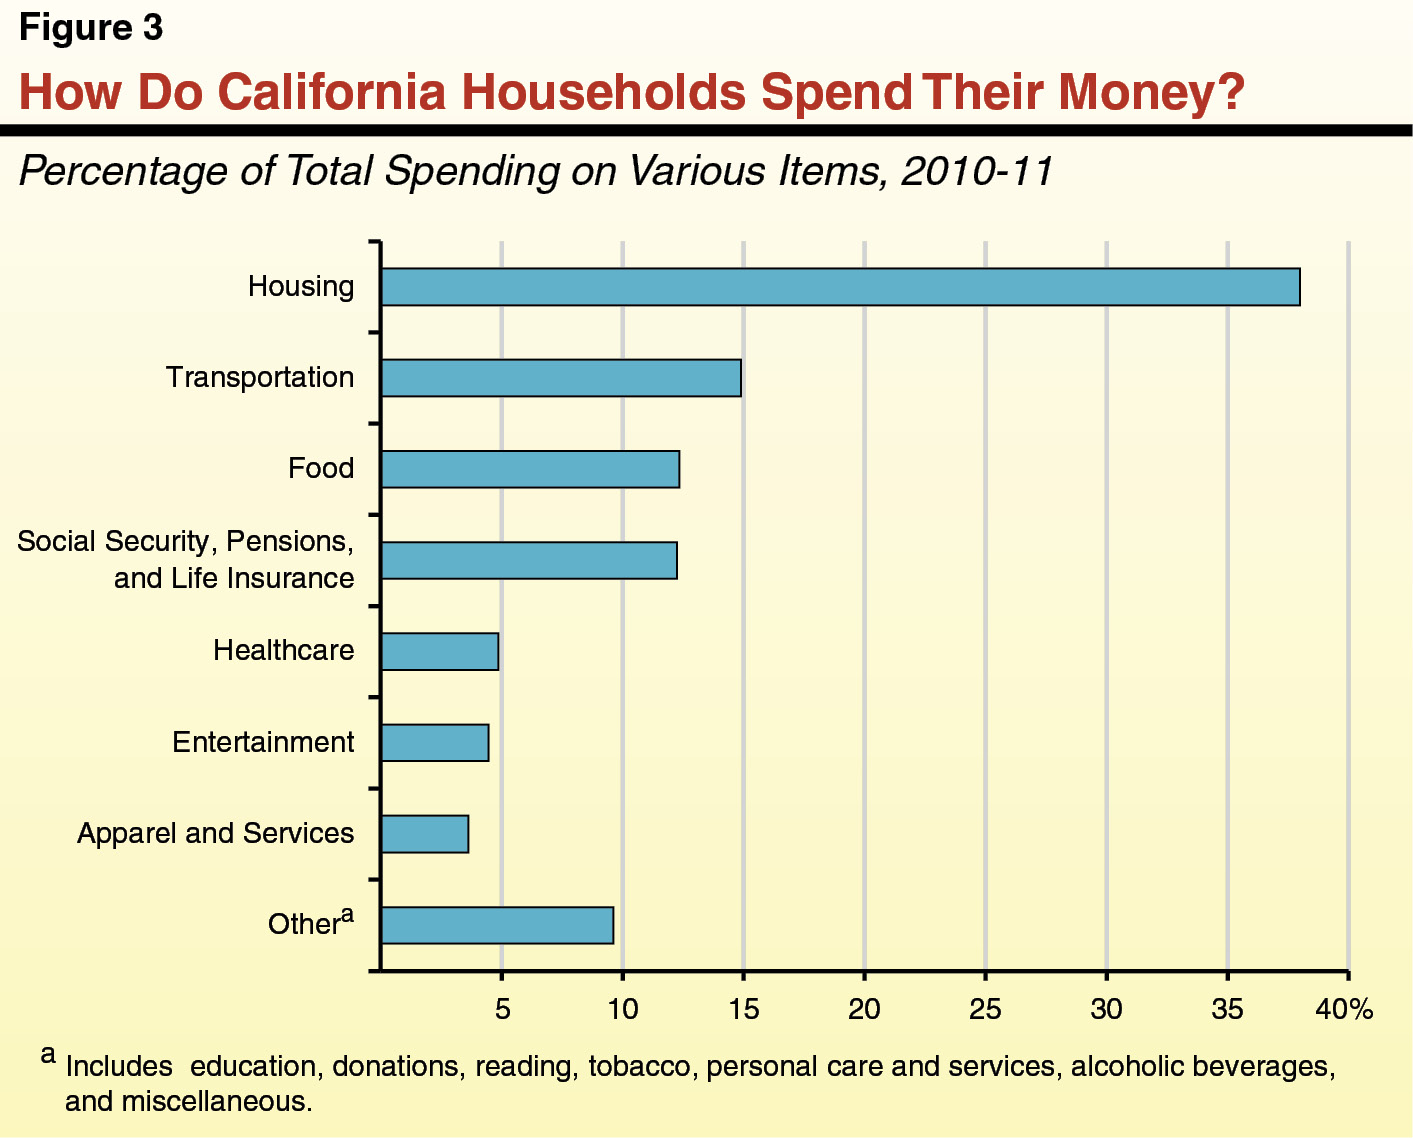 How Do california Households Spend Their Money?